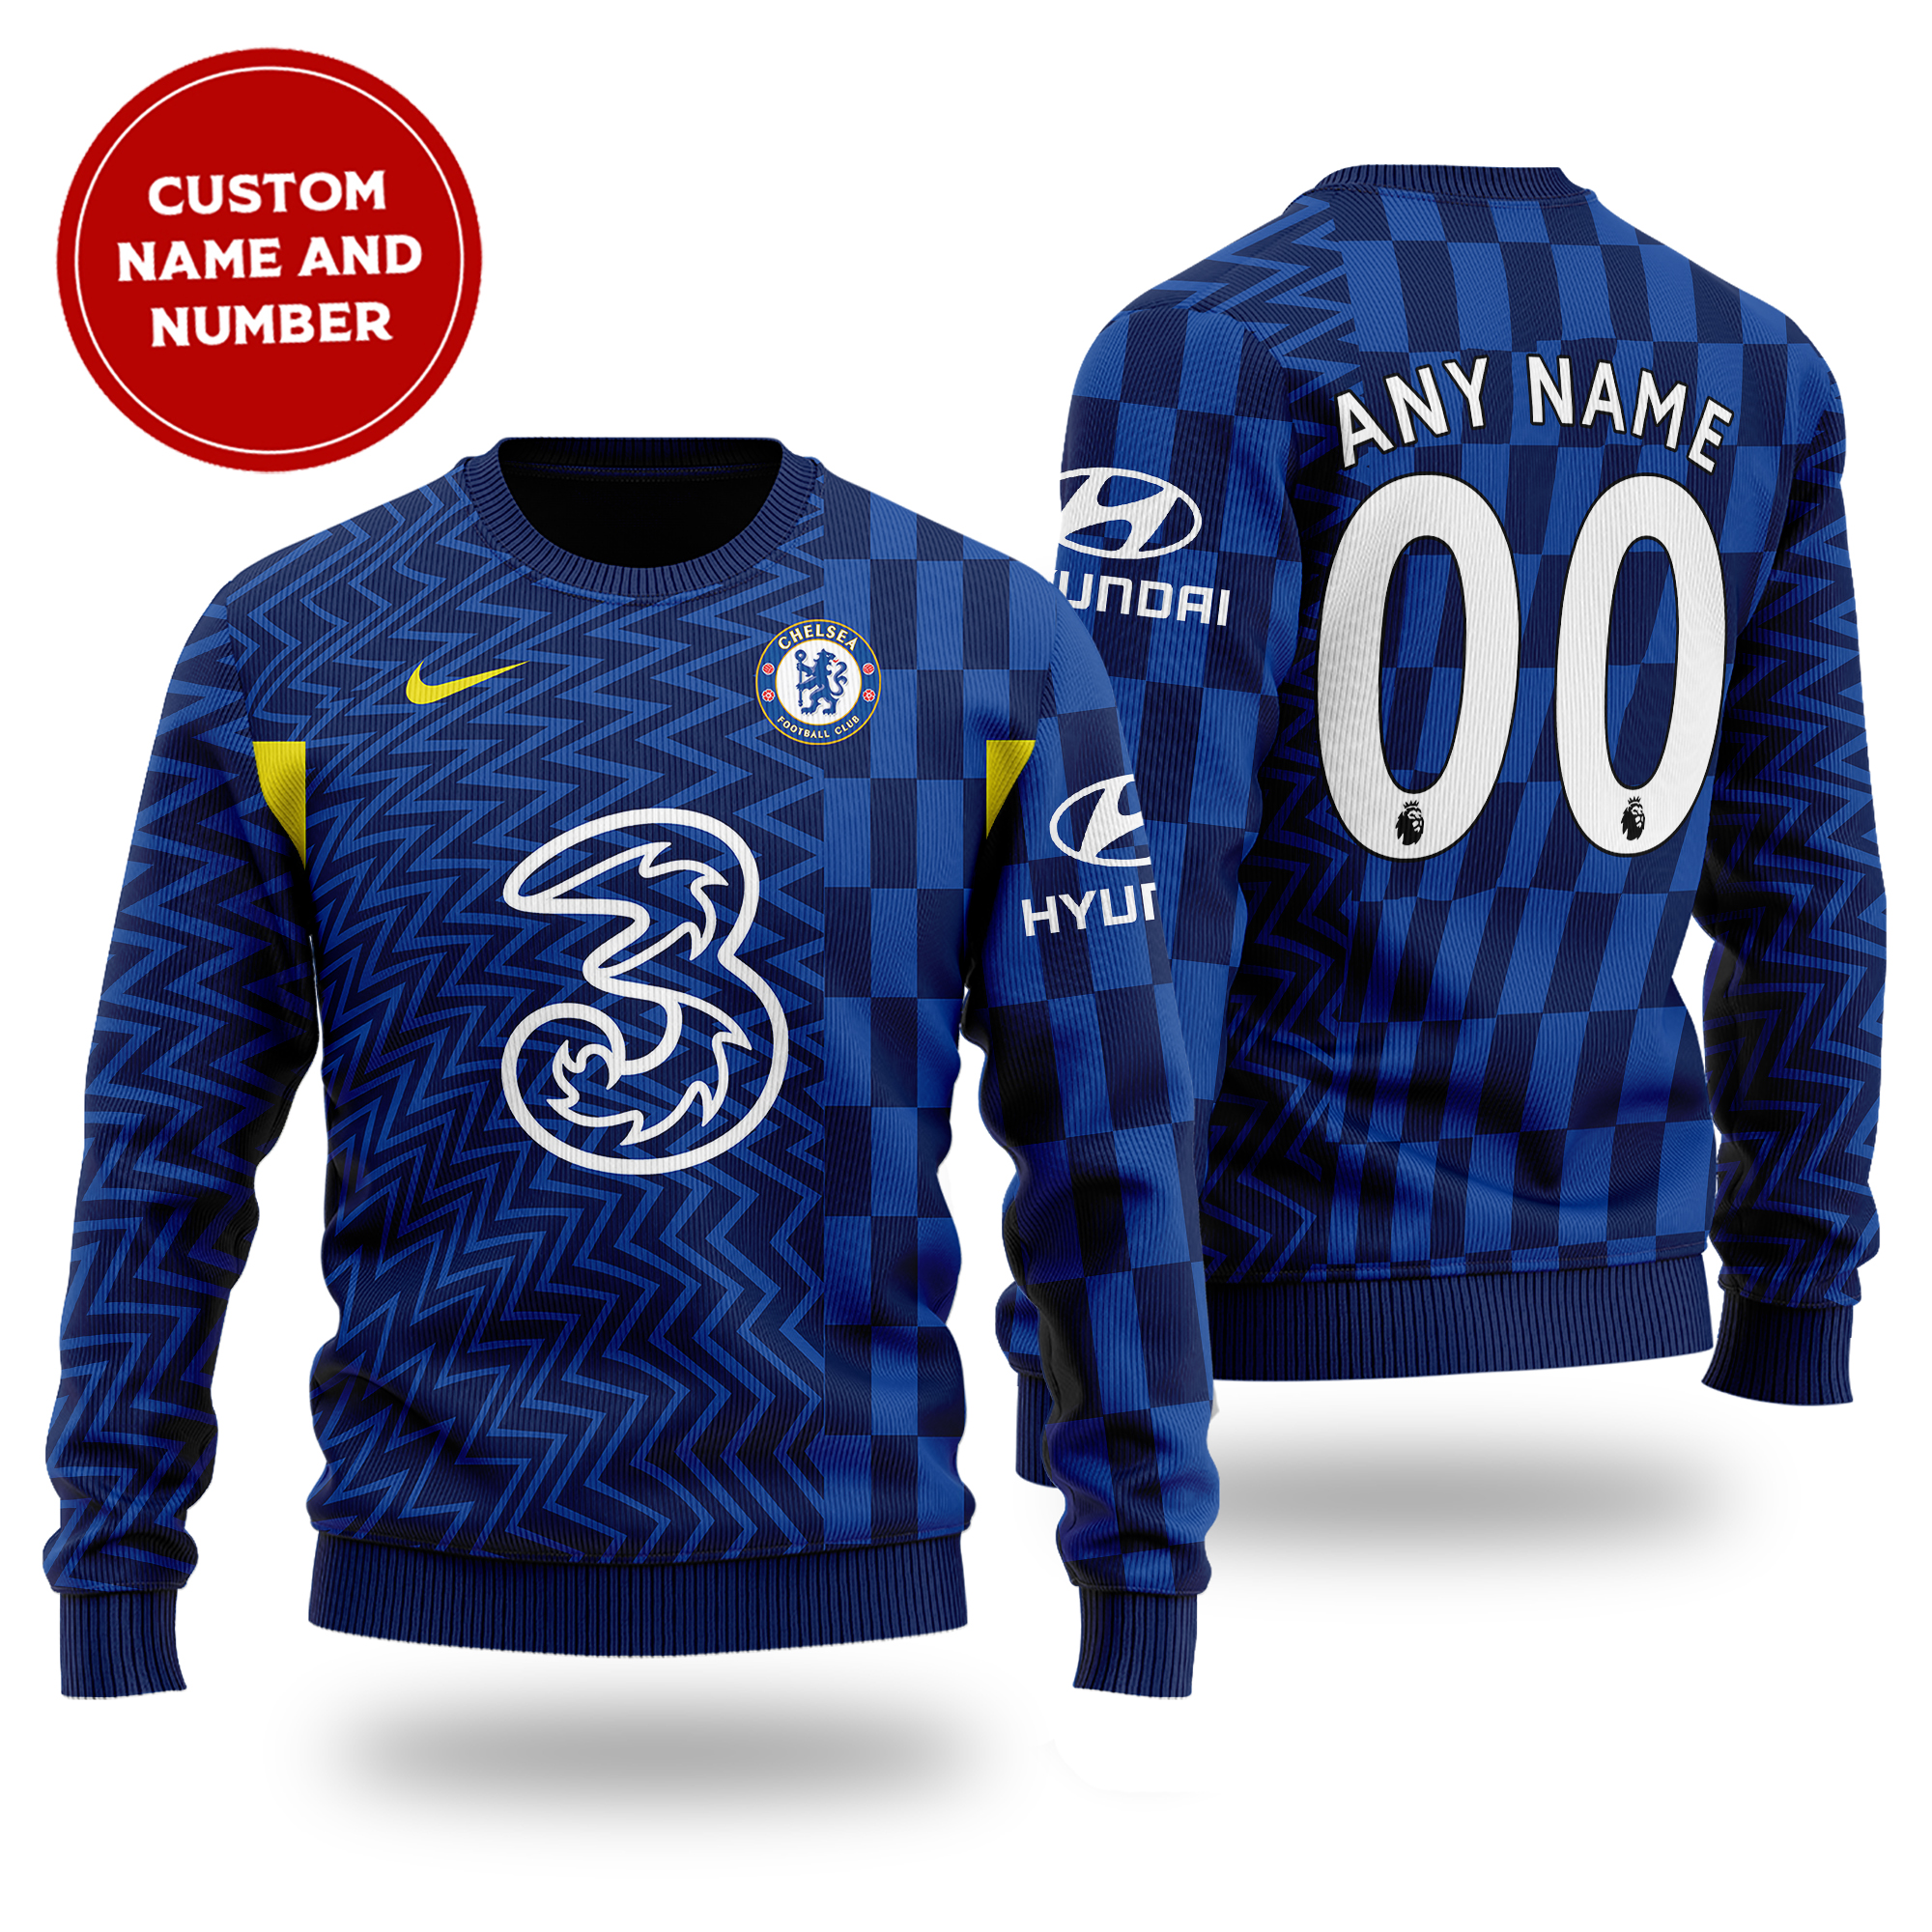 Personalized_Premier_League_Chelsea_Christmas_Sweater